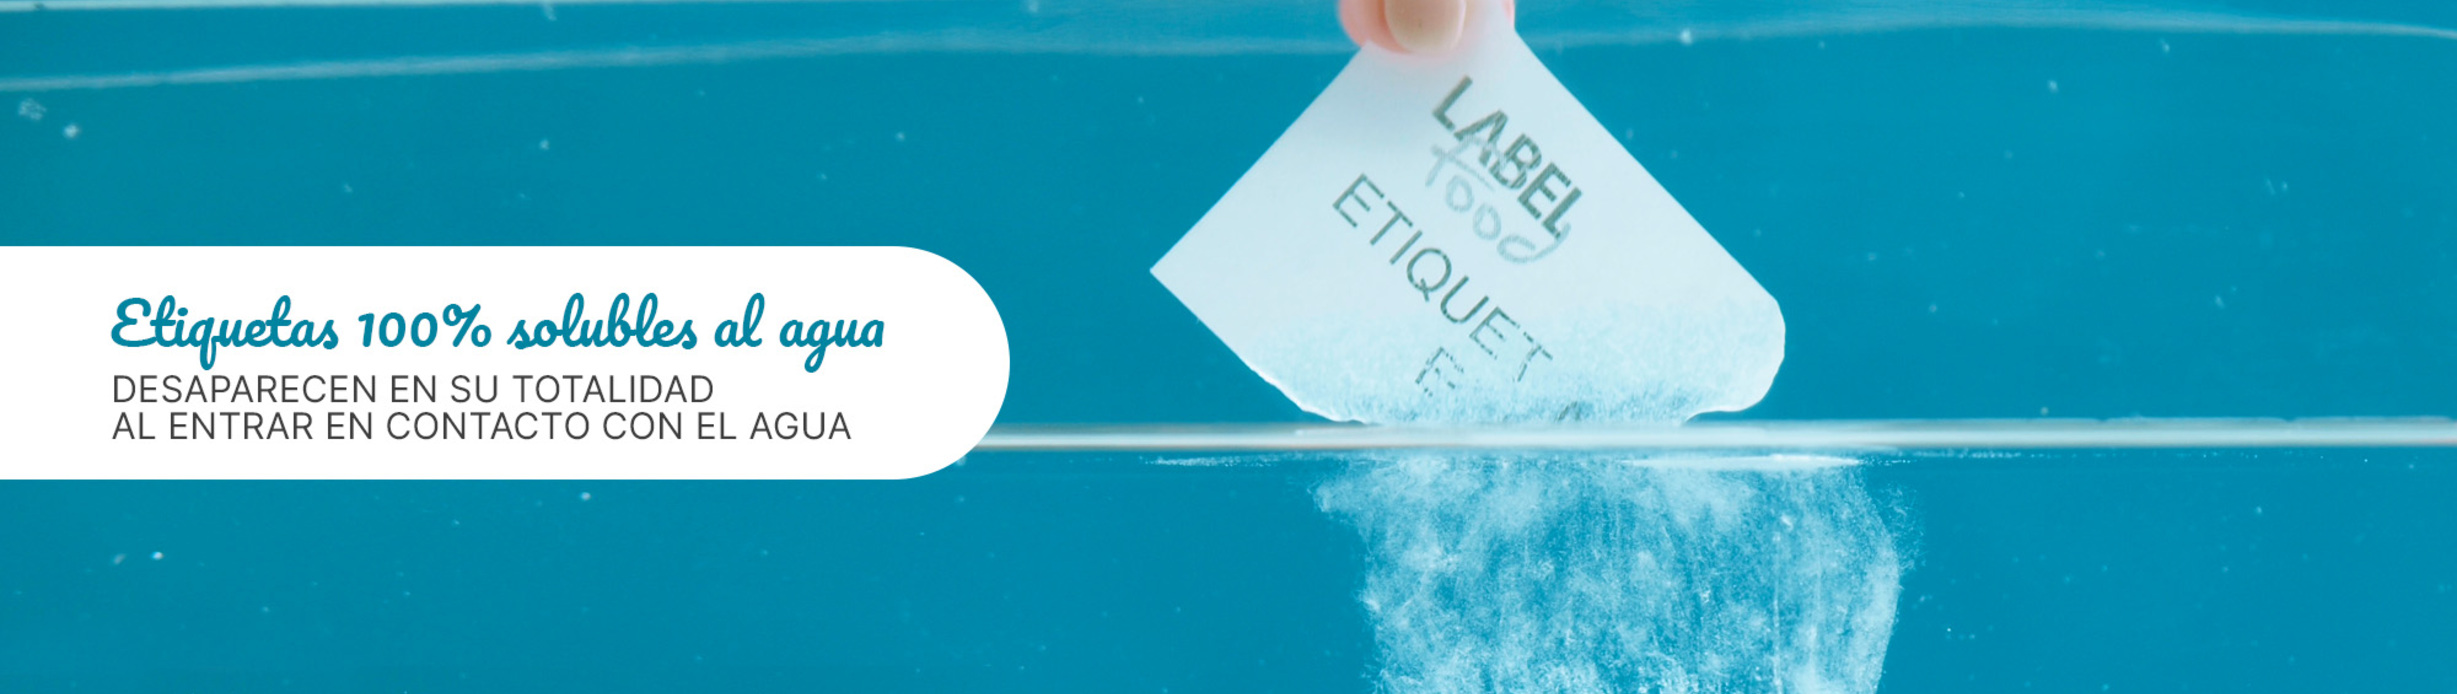 Etiquetas ashesivo soluble al agua